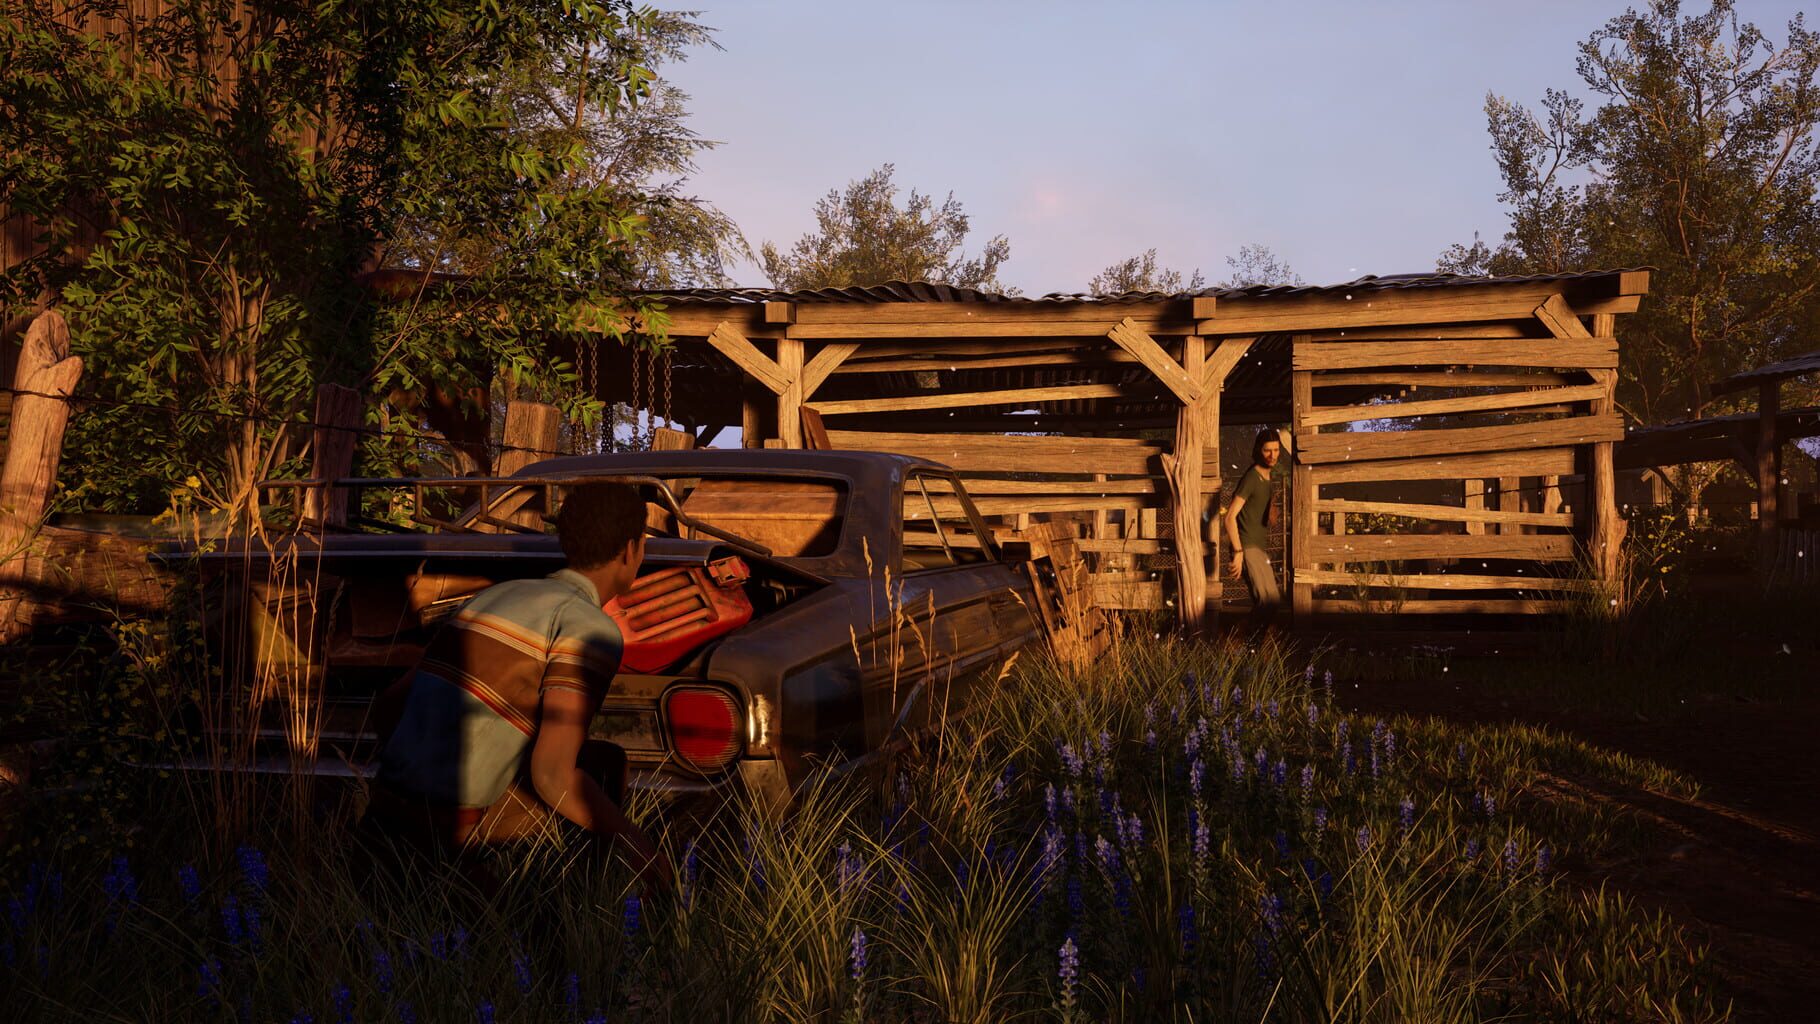 The Texas Chain Saw Massacre screenshots